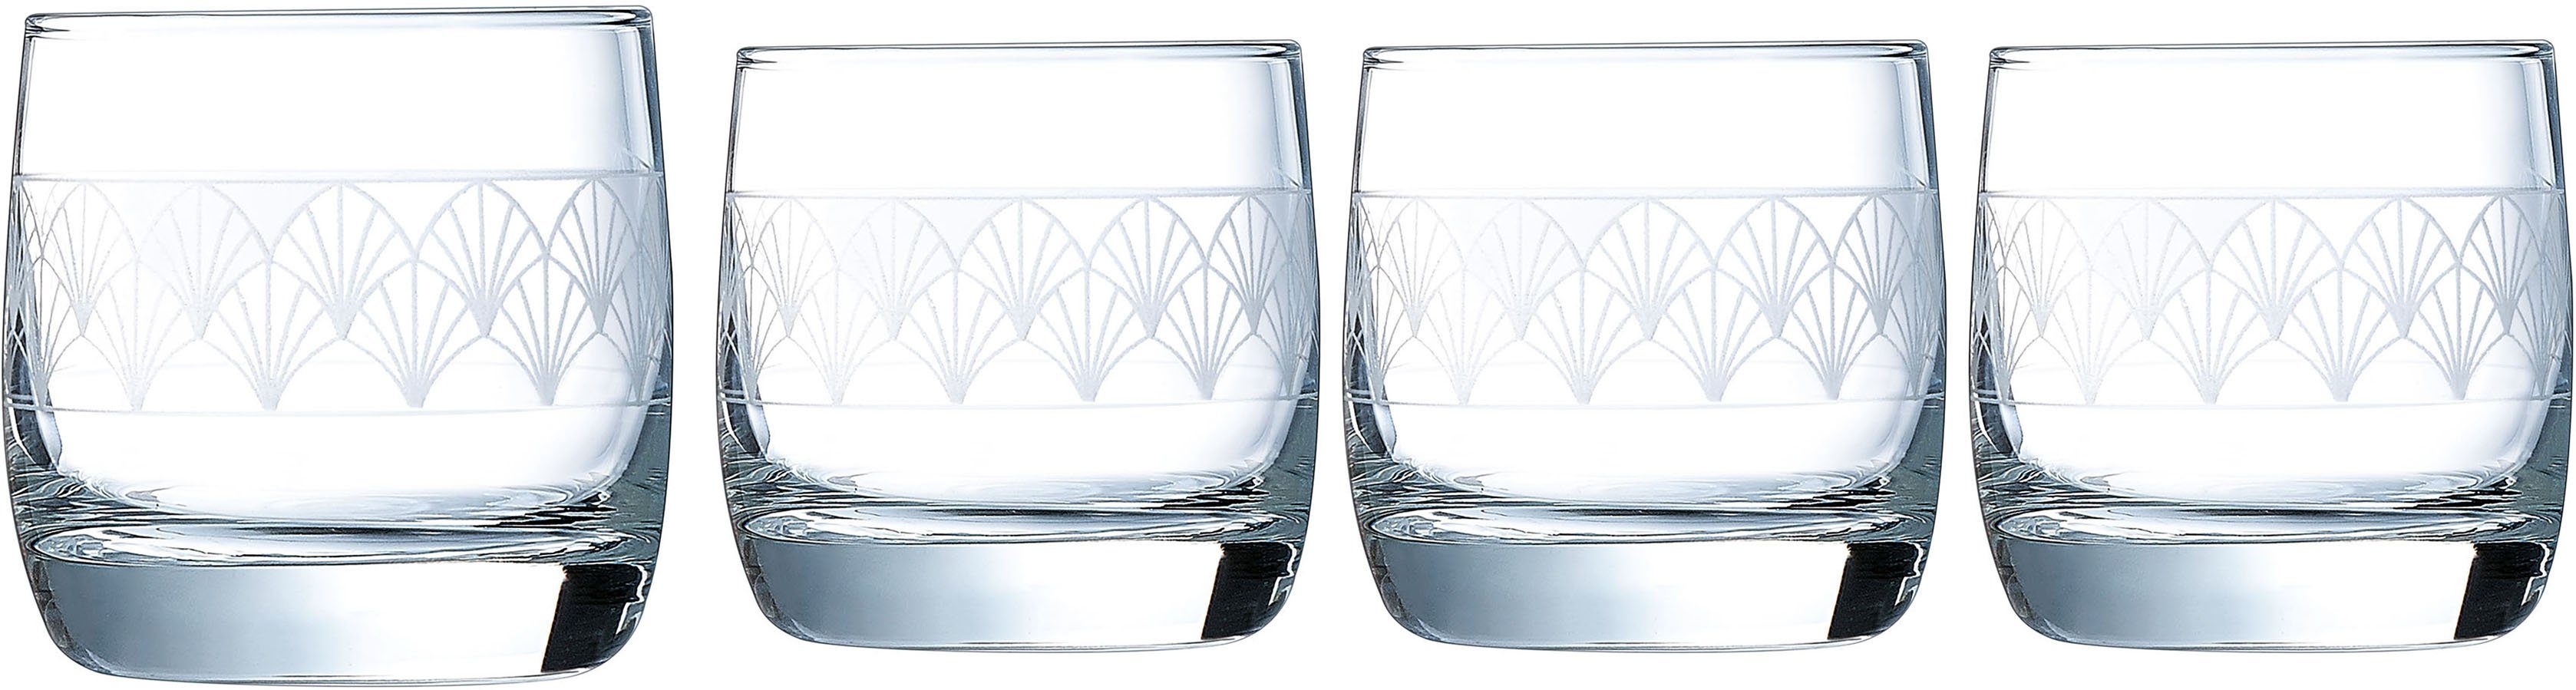 Luminarc Whiskyglas Trinkglas Paradisio, Glas, Стекло Set, mit Pantographie-Optik, 4-teilig, Made in Europe